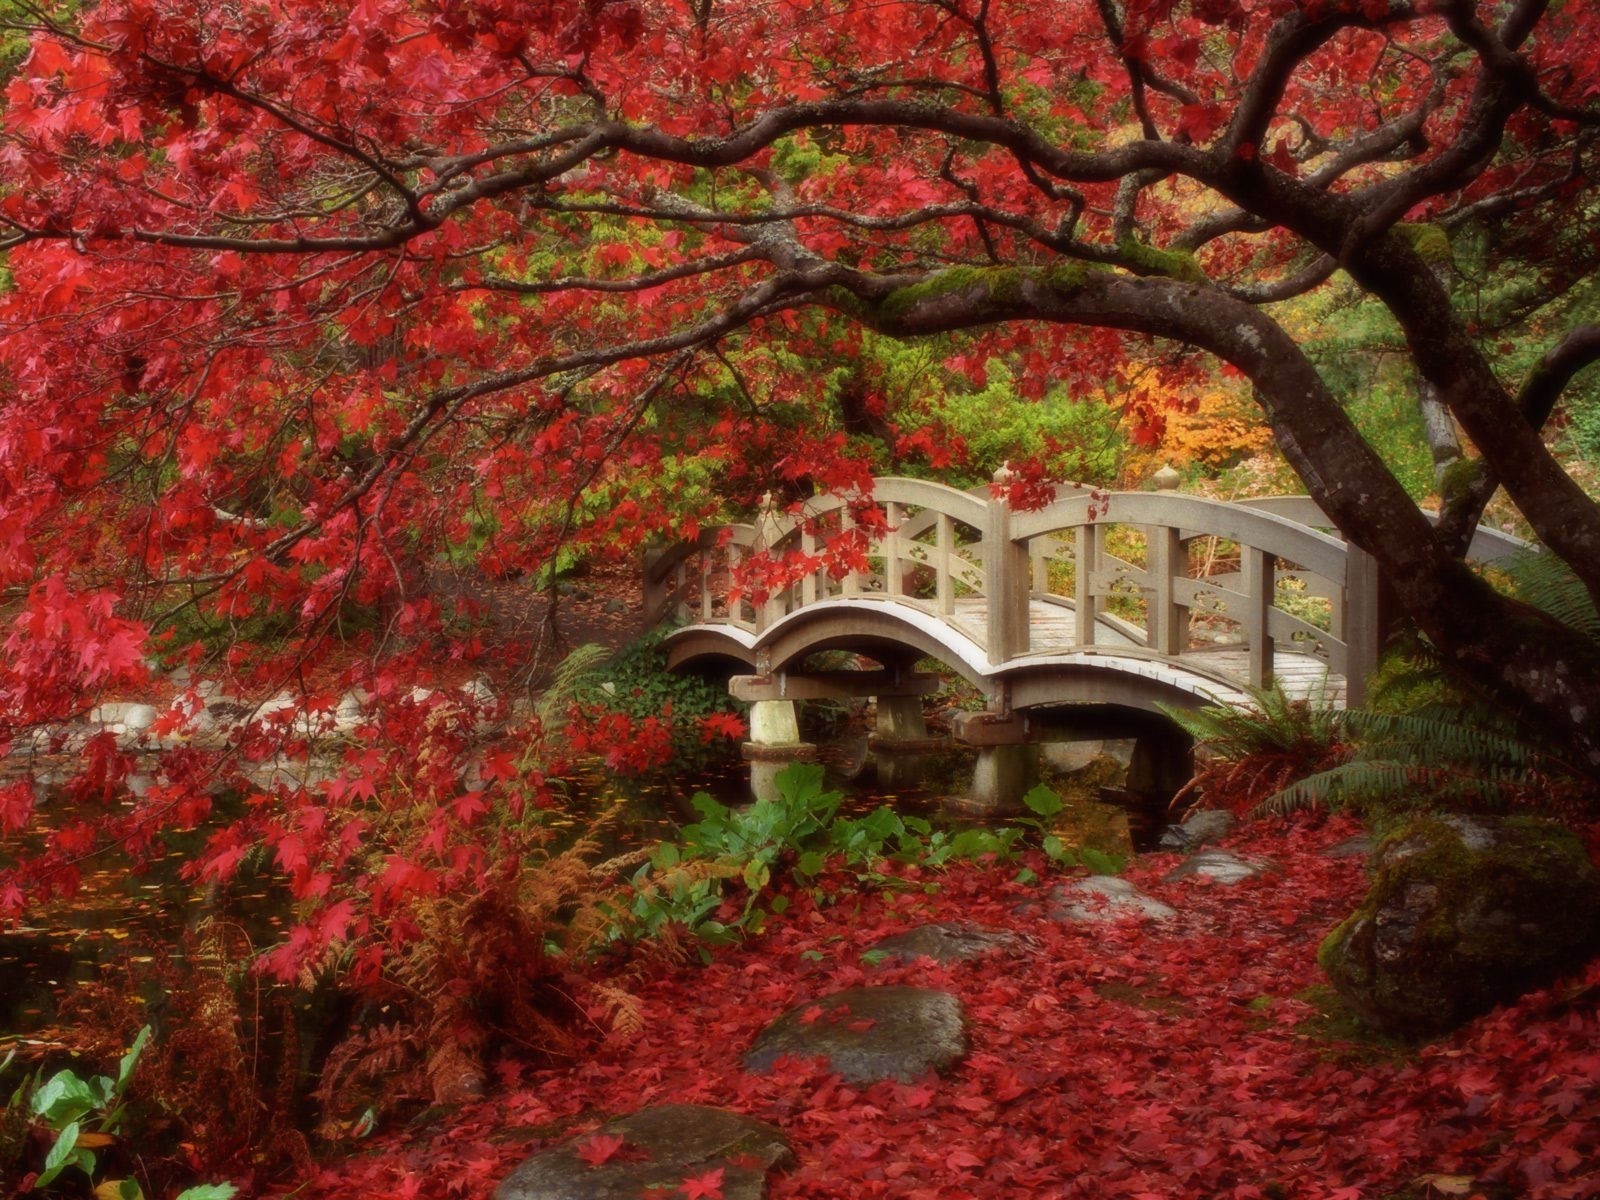 Mobile wallpaper: Landscape, Bridges, Trees, Autumn, 7368 download the picture for free